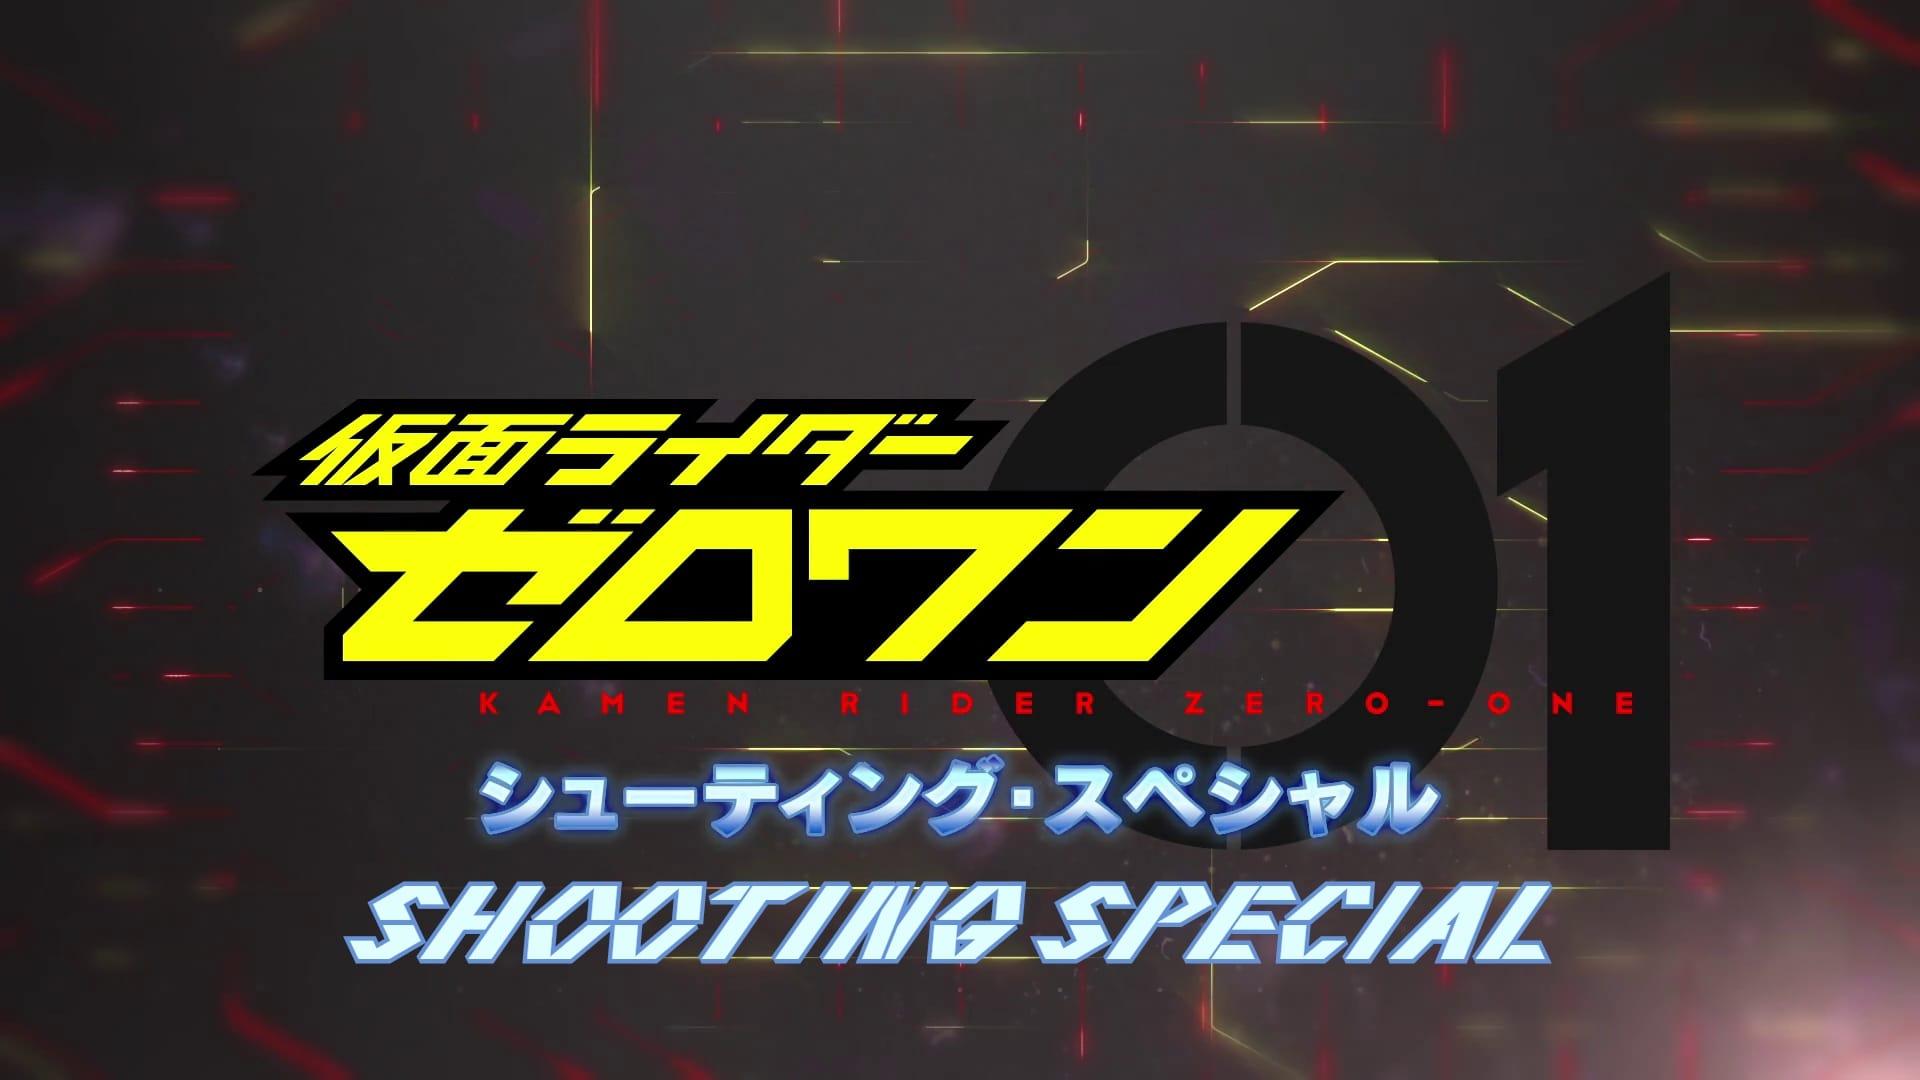 Kamen Rider Zero-One: Shooting Special backdrop